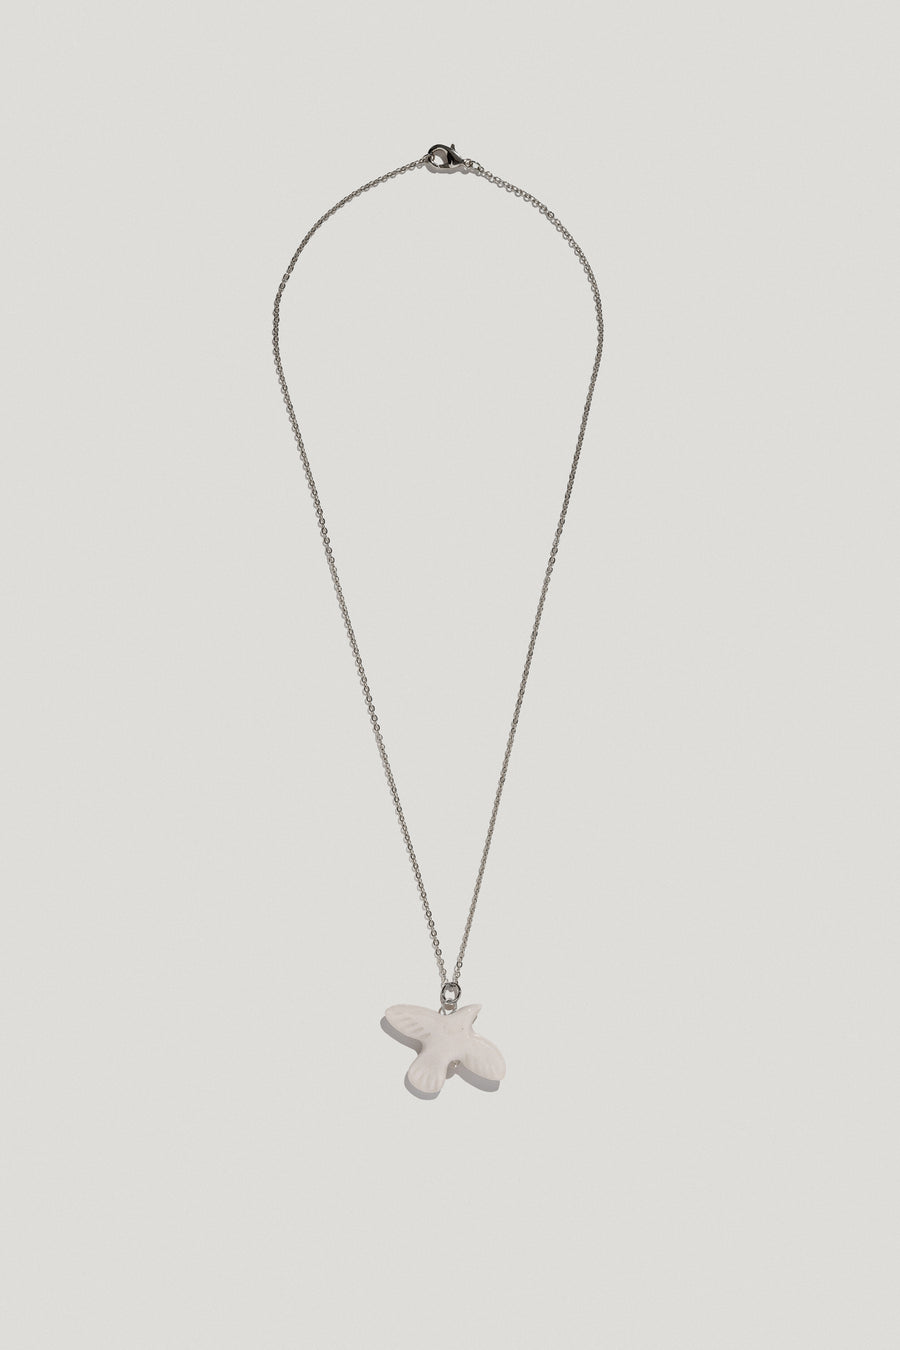 Myrni bird pendant on a chain